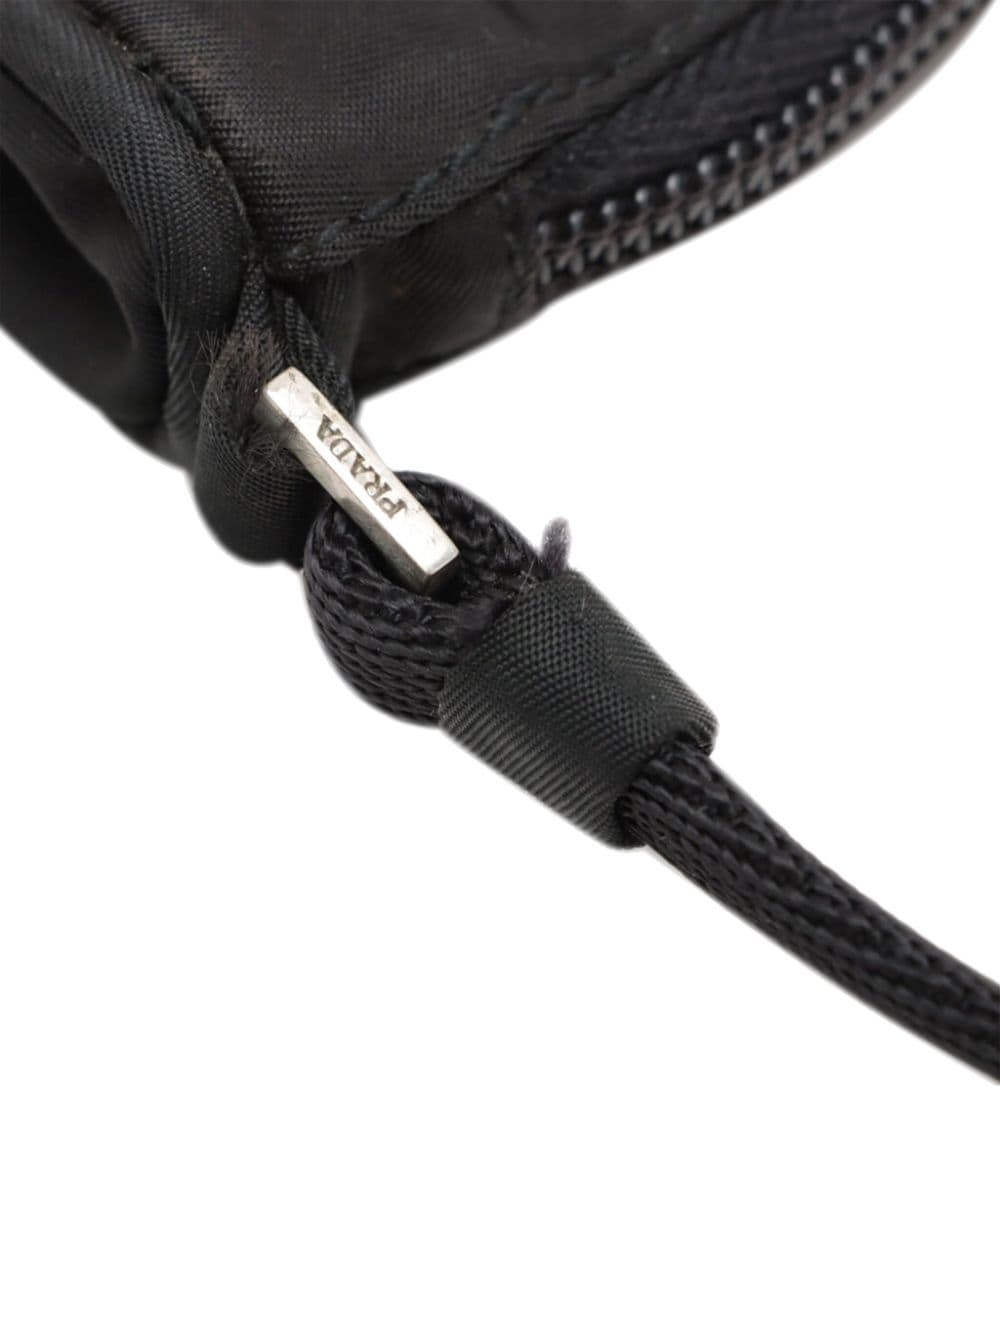 Pre-owned Prada Tessuto Shoulder Bag In Black